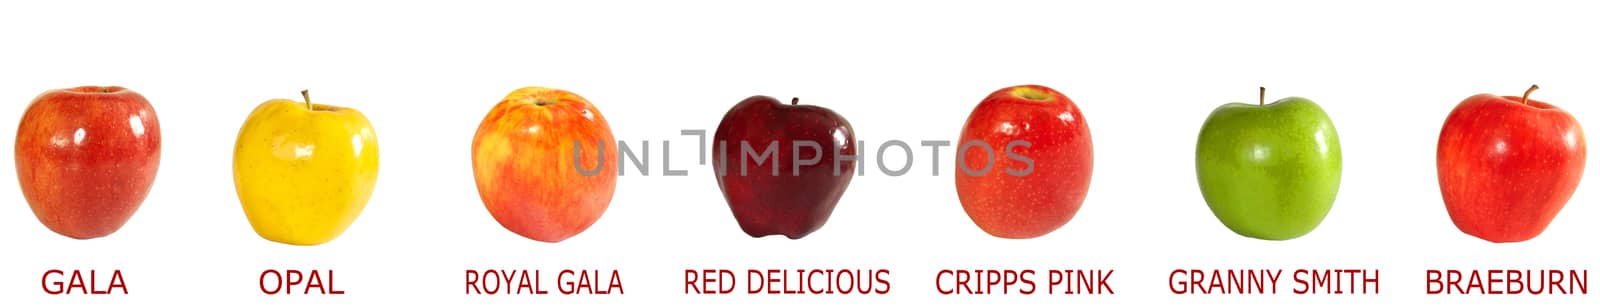 apples banner by debramillet